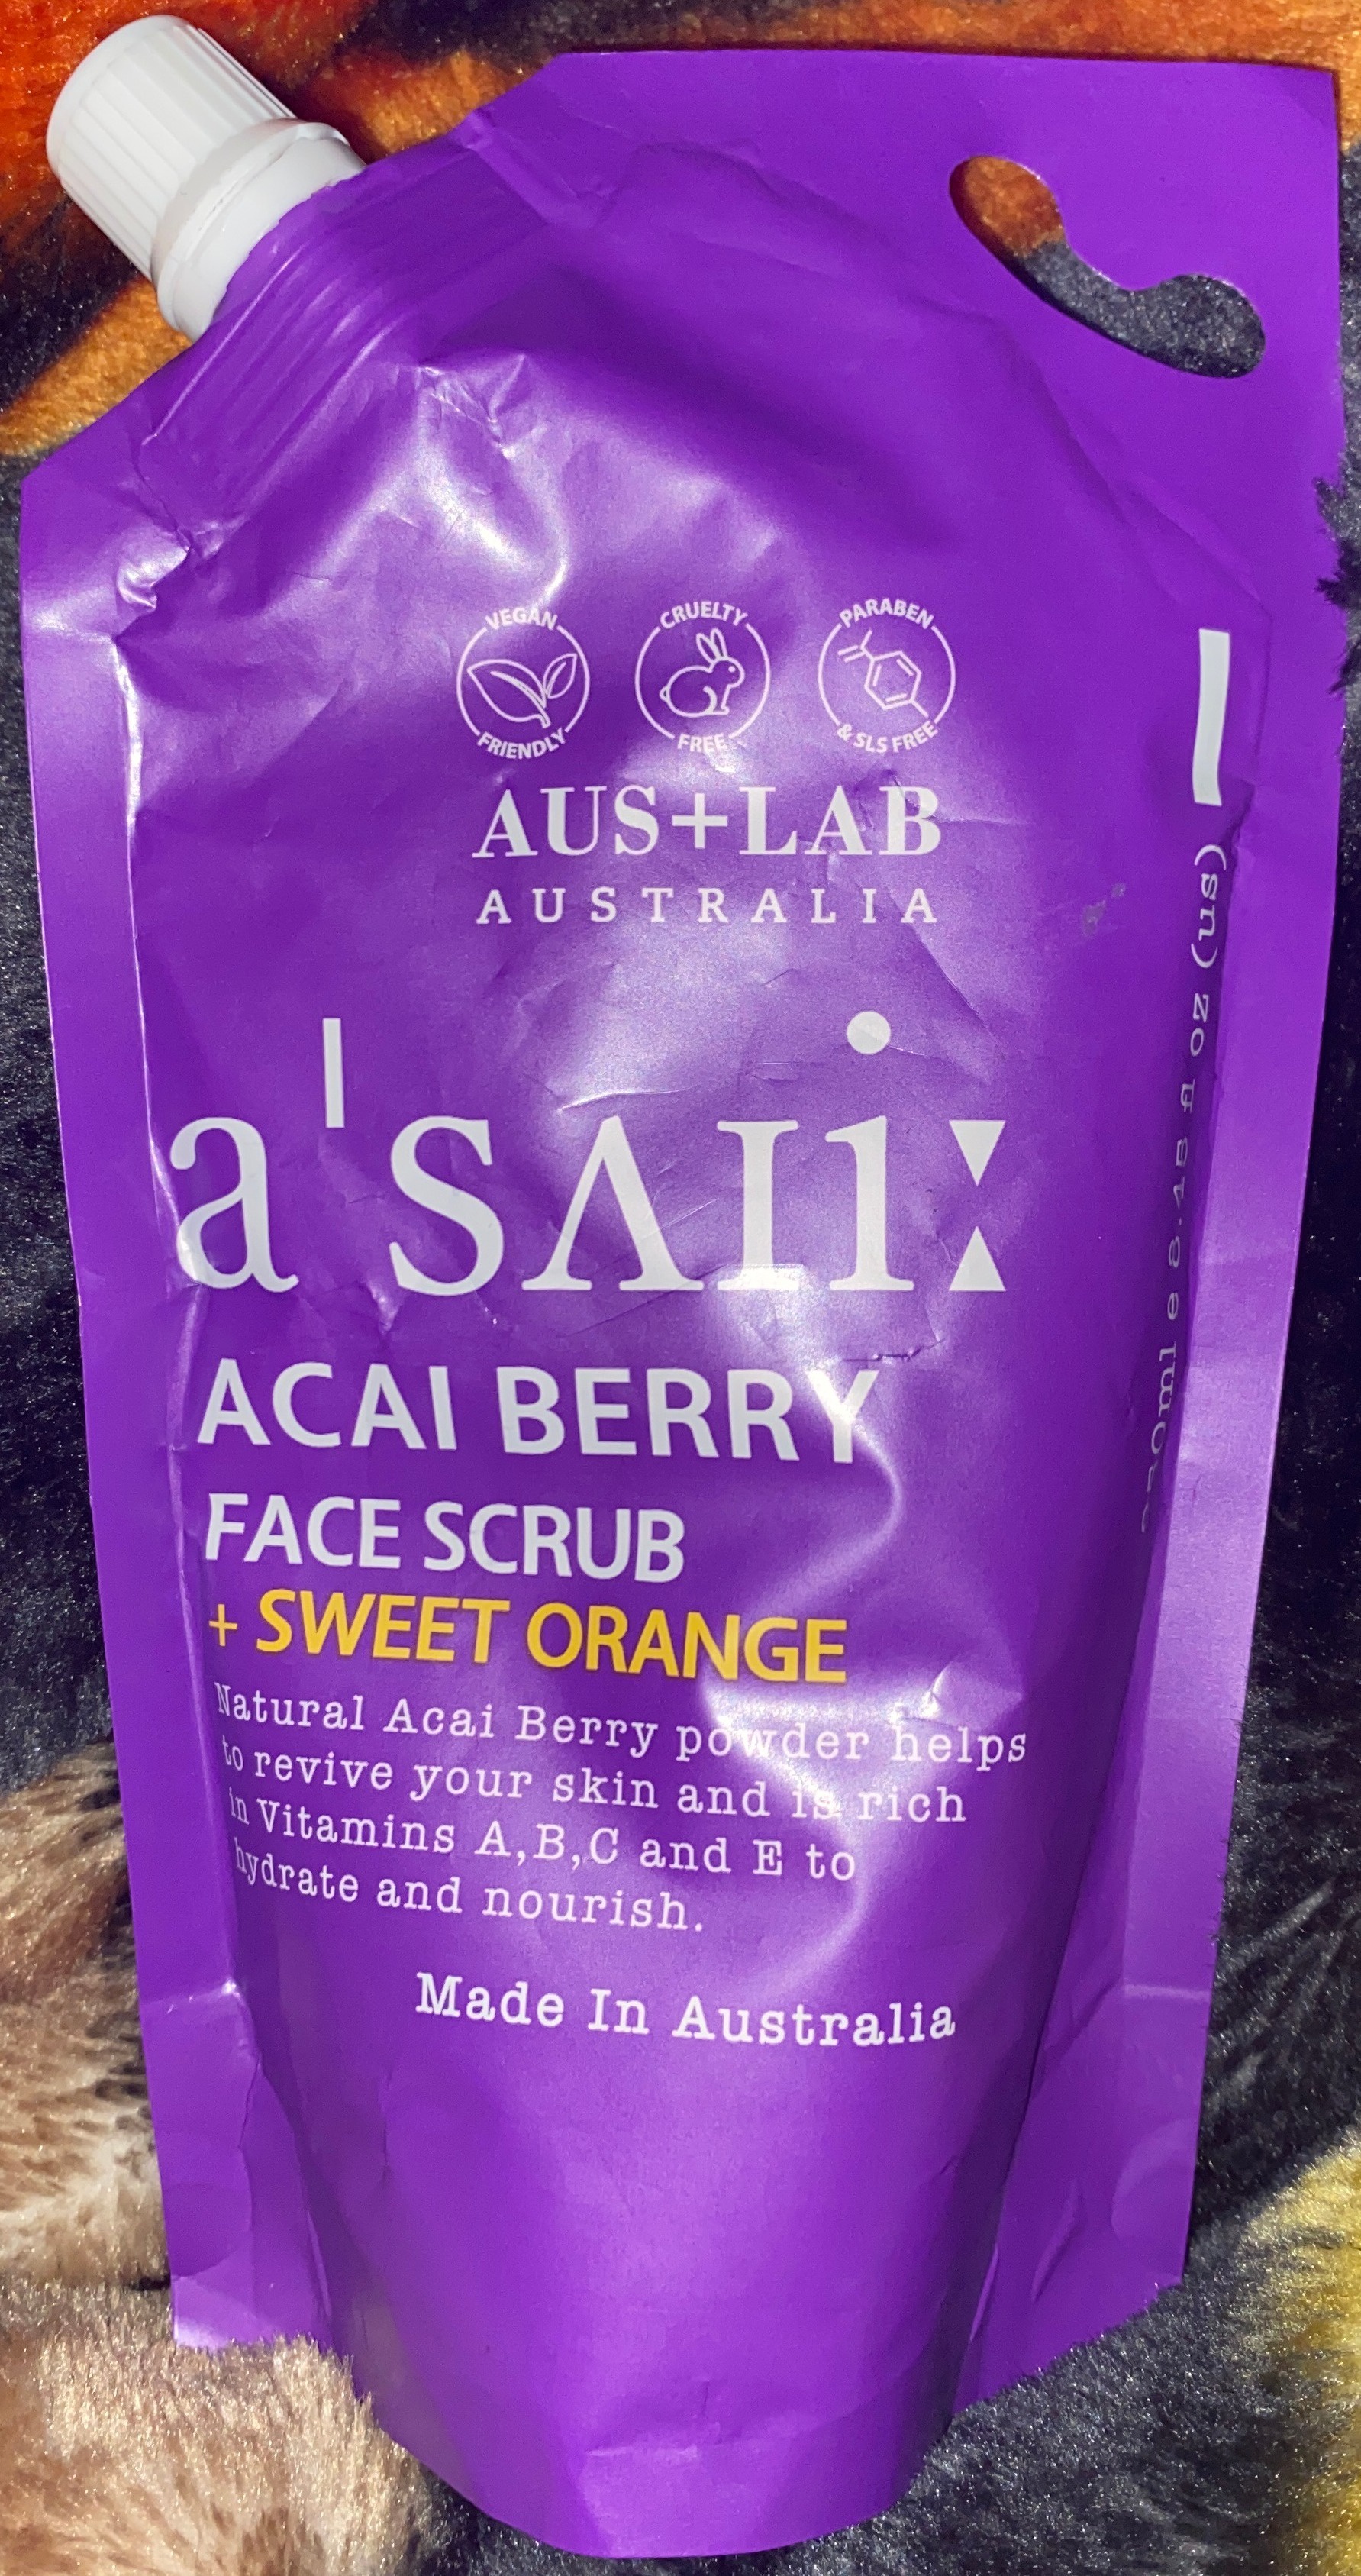 aus + lab australia Acai Berry Face Scrub + Sweet Orange